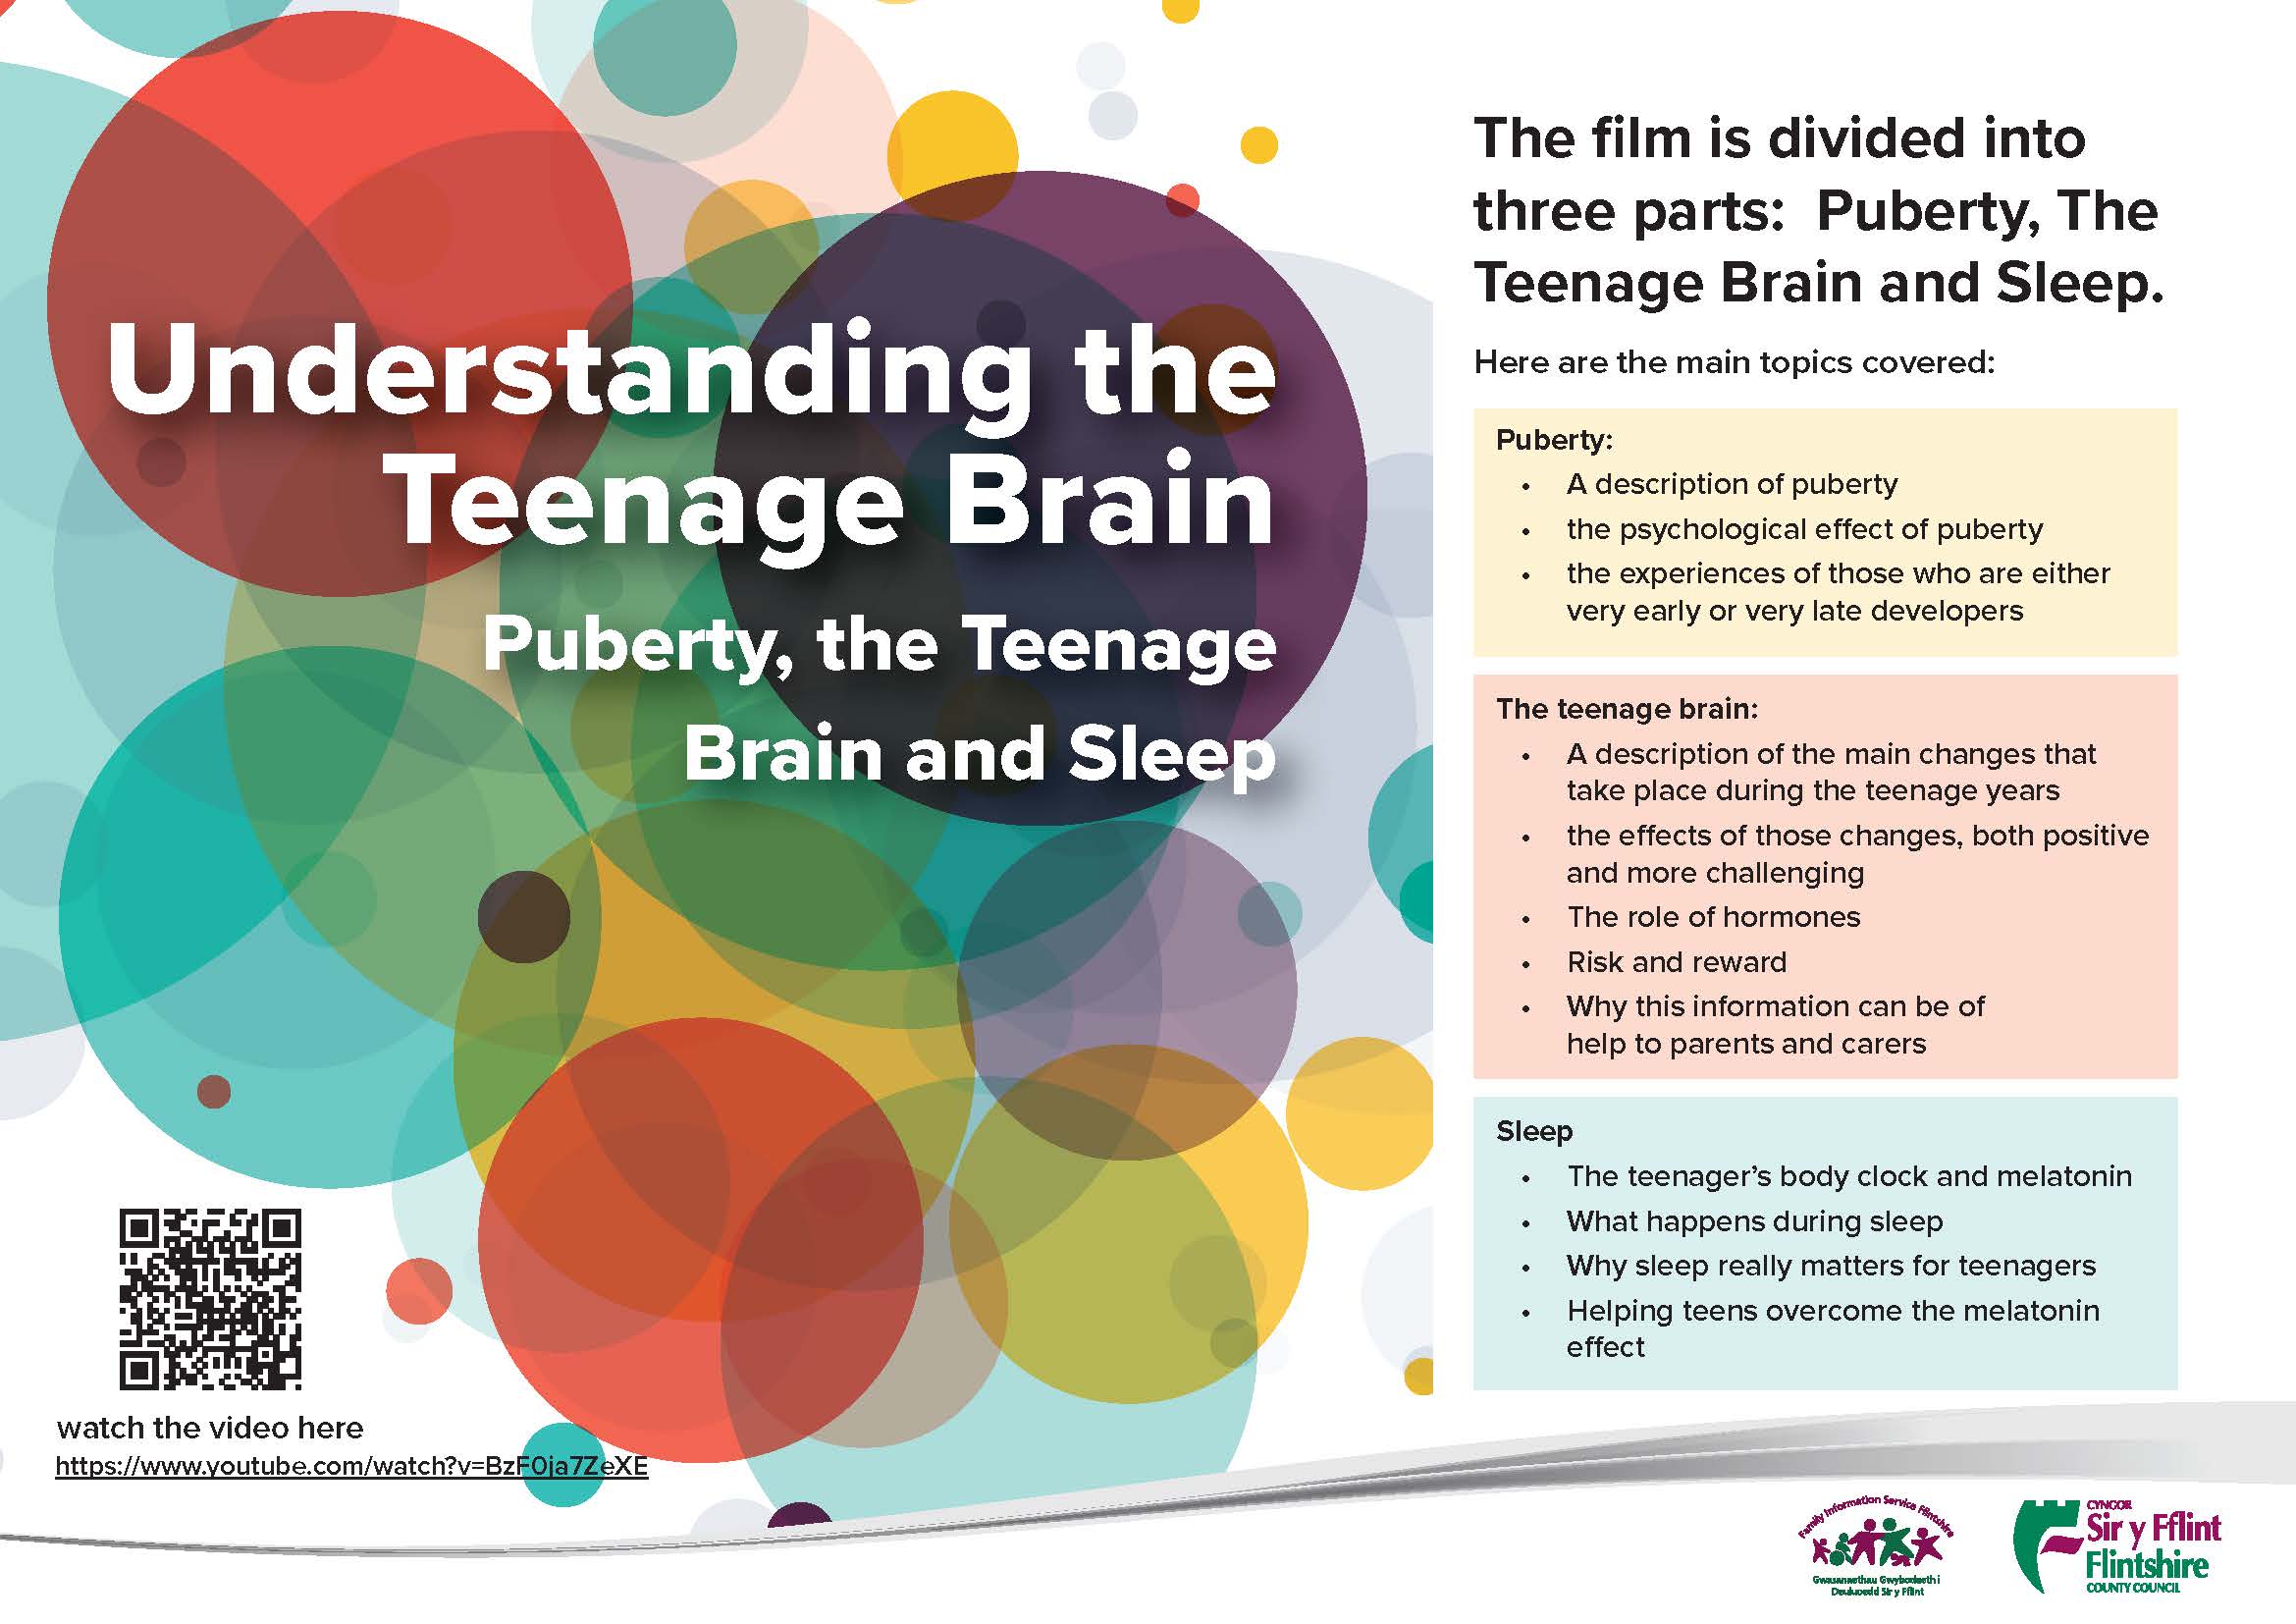 Information Sheet 1 - Puberty, the Teenage Brain and Sleep